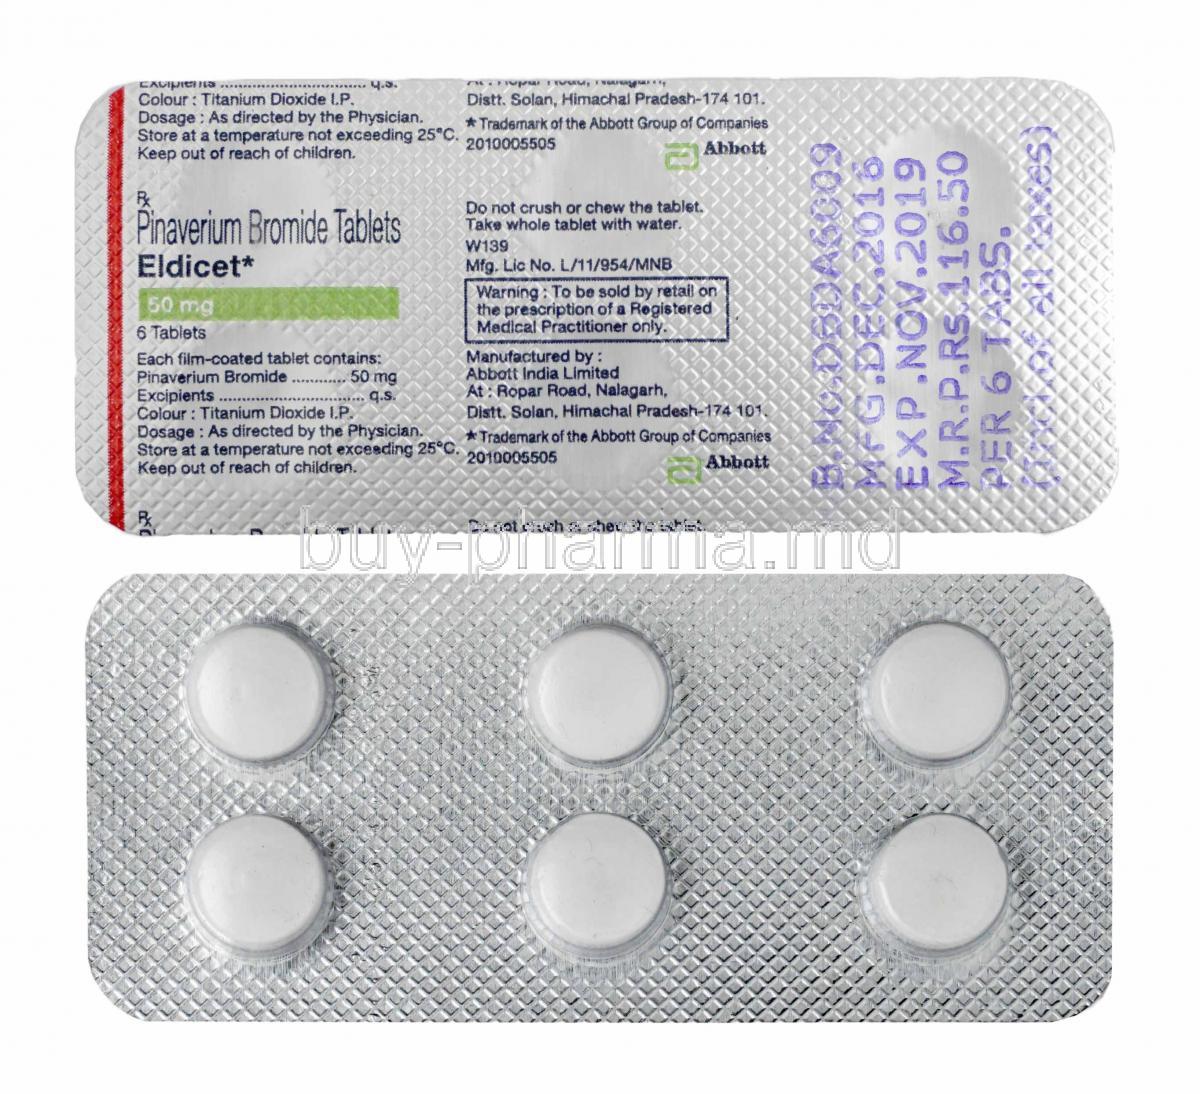 Eldicet, Pinaverium bromide 50mg tablets